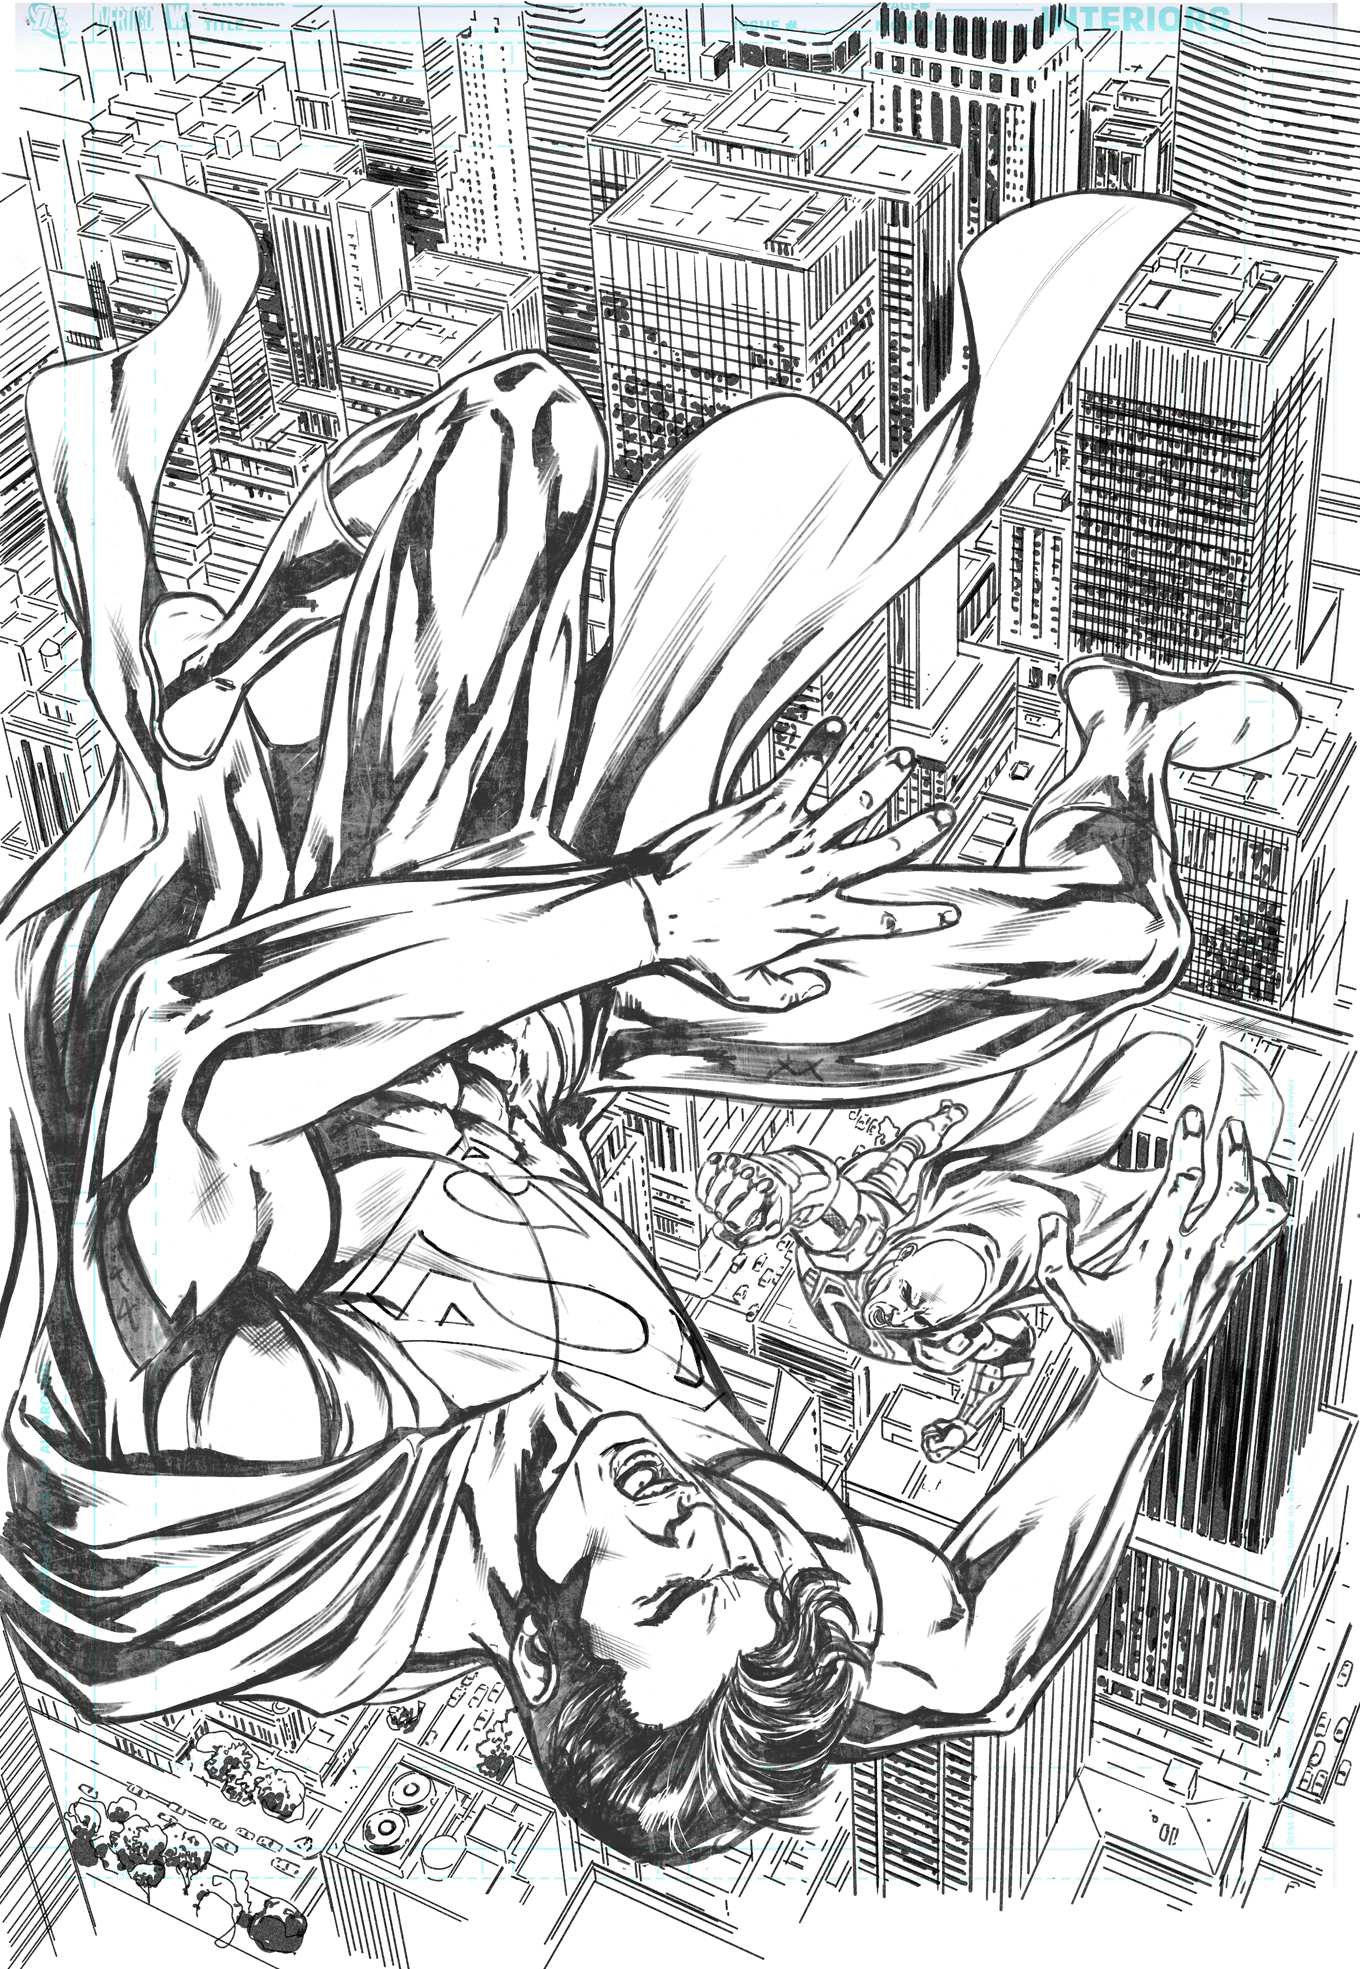 action comics cover 986a.jpg